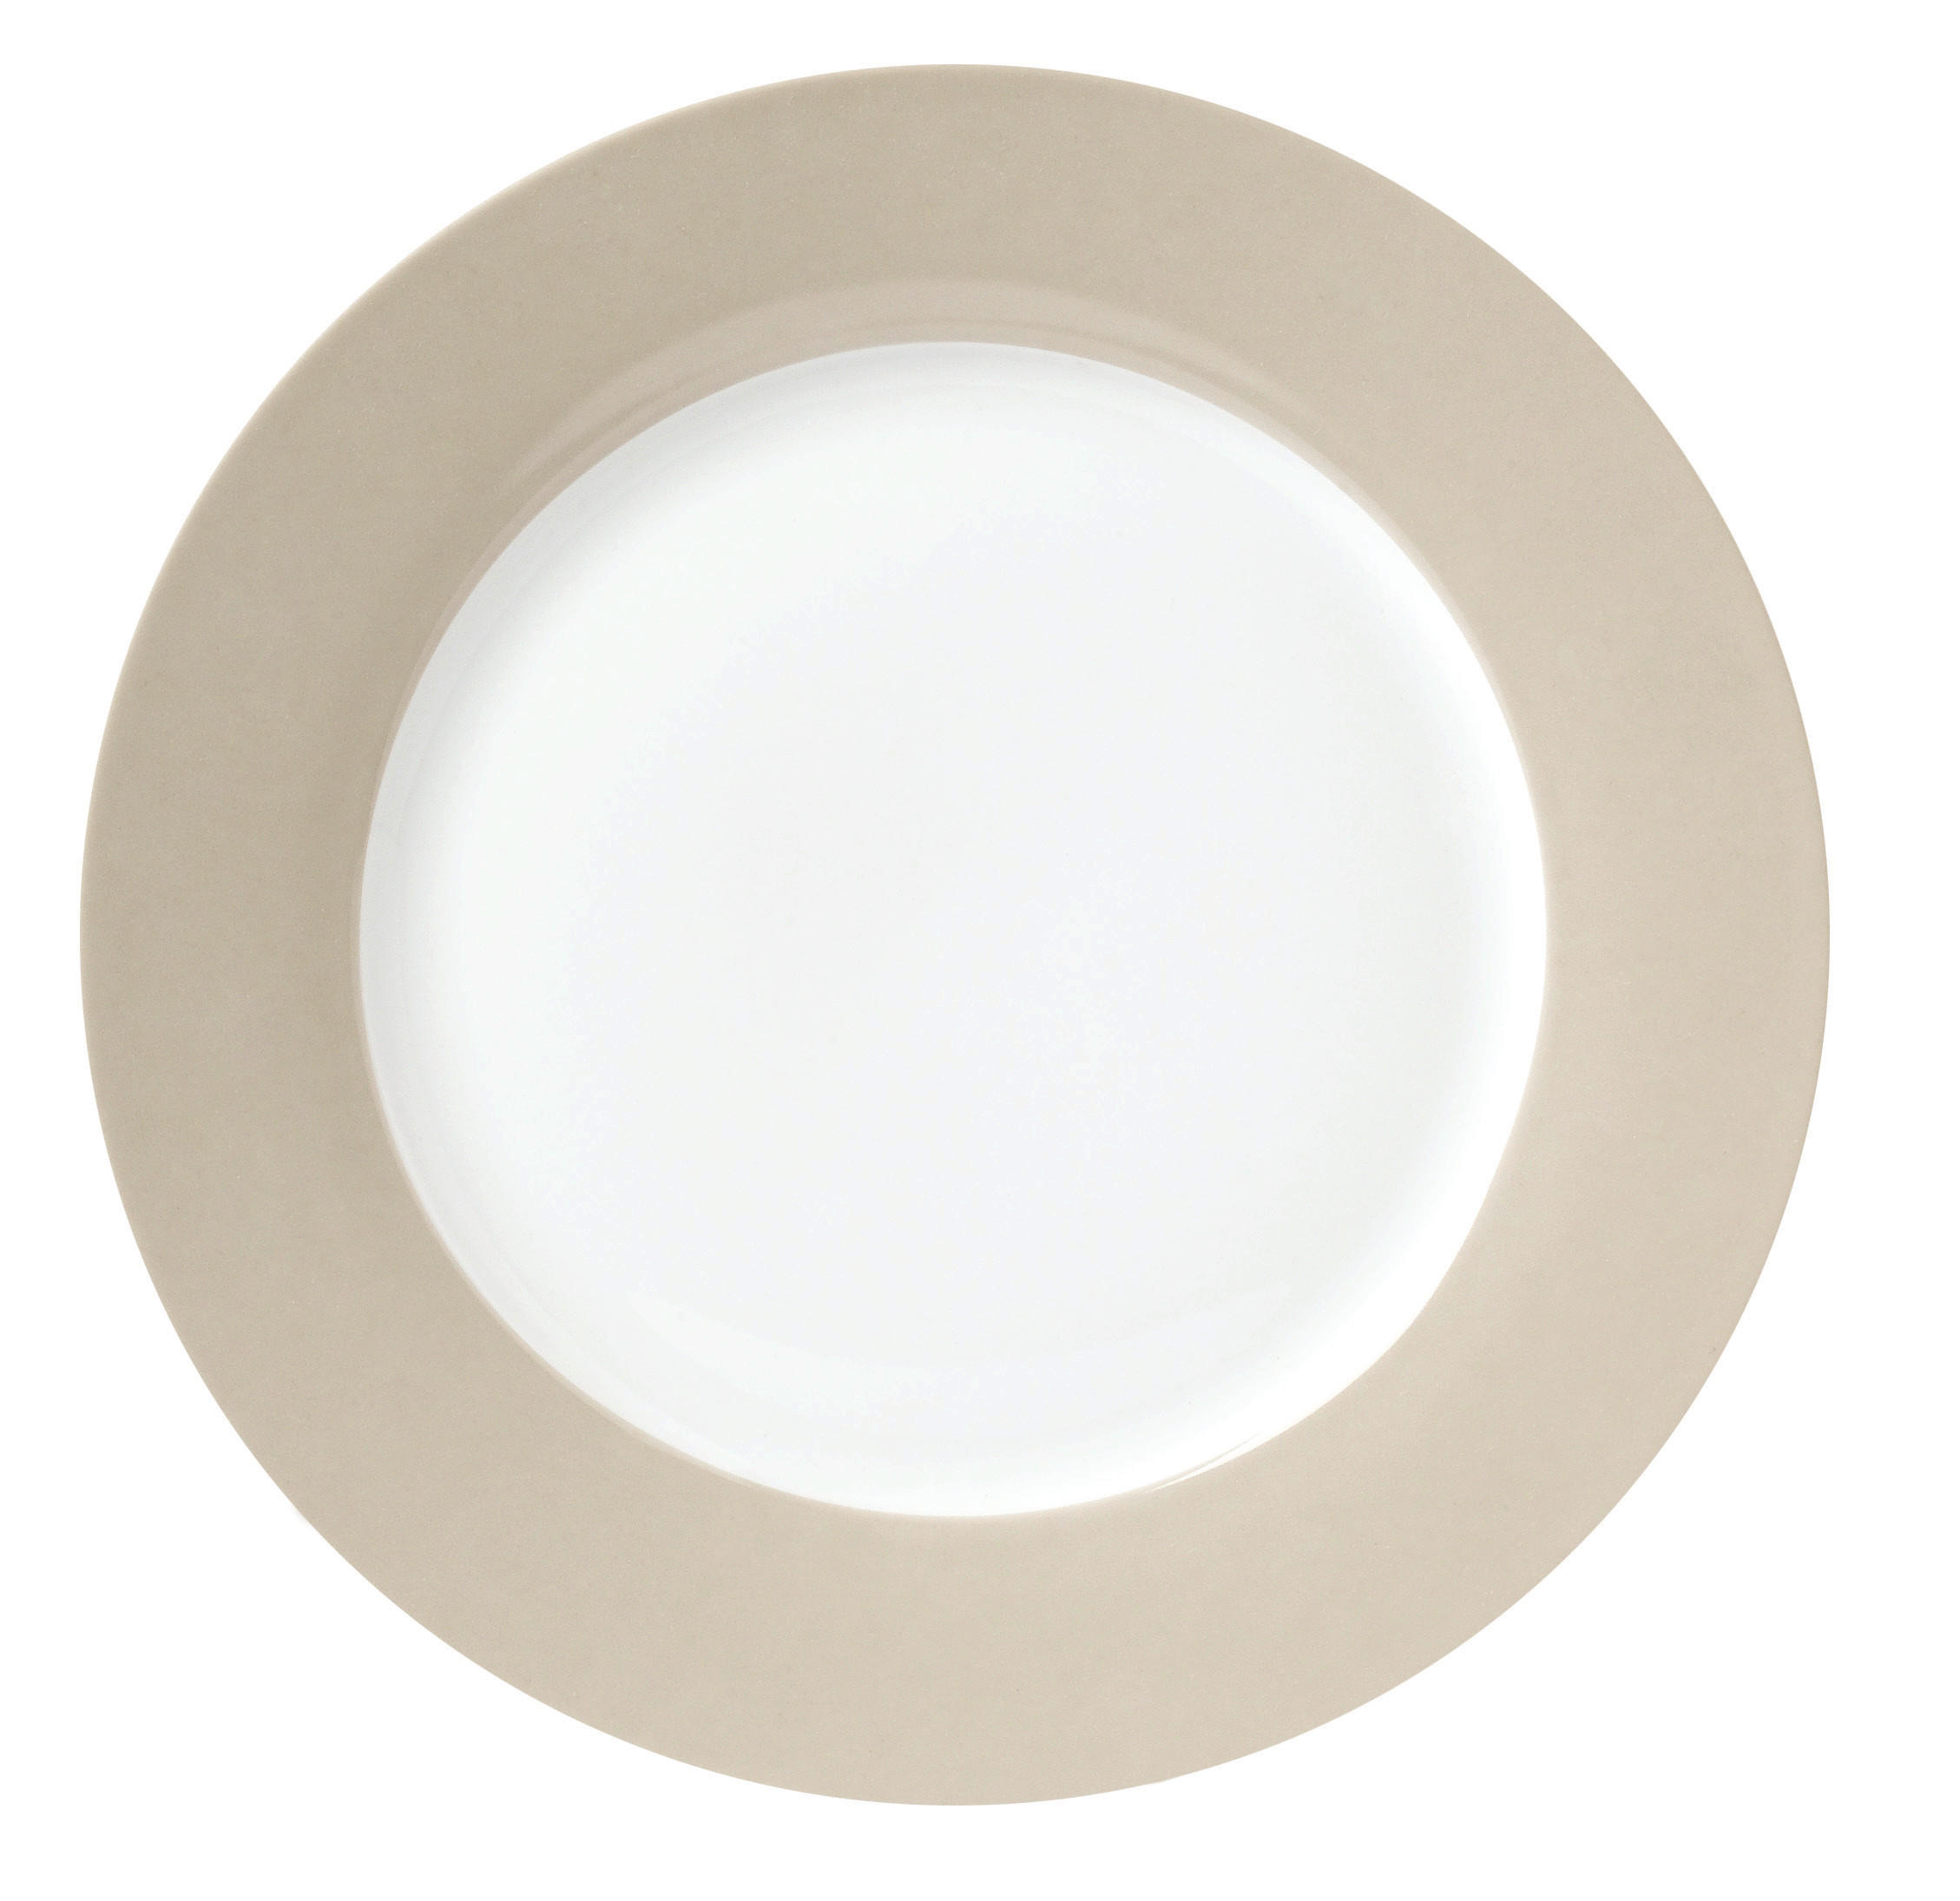 DESSERTTELLERSET VARIO 6-teilig  - Taupe/Weiß, Basics, Keramik (20cm)